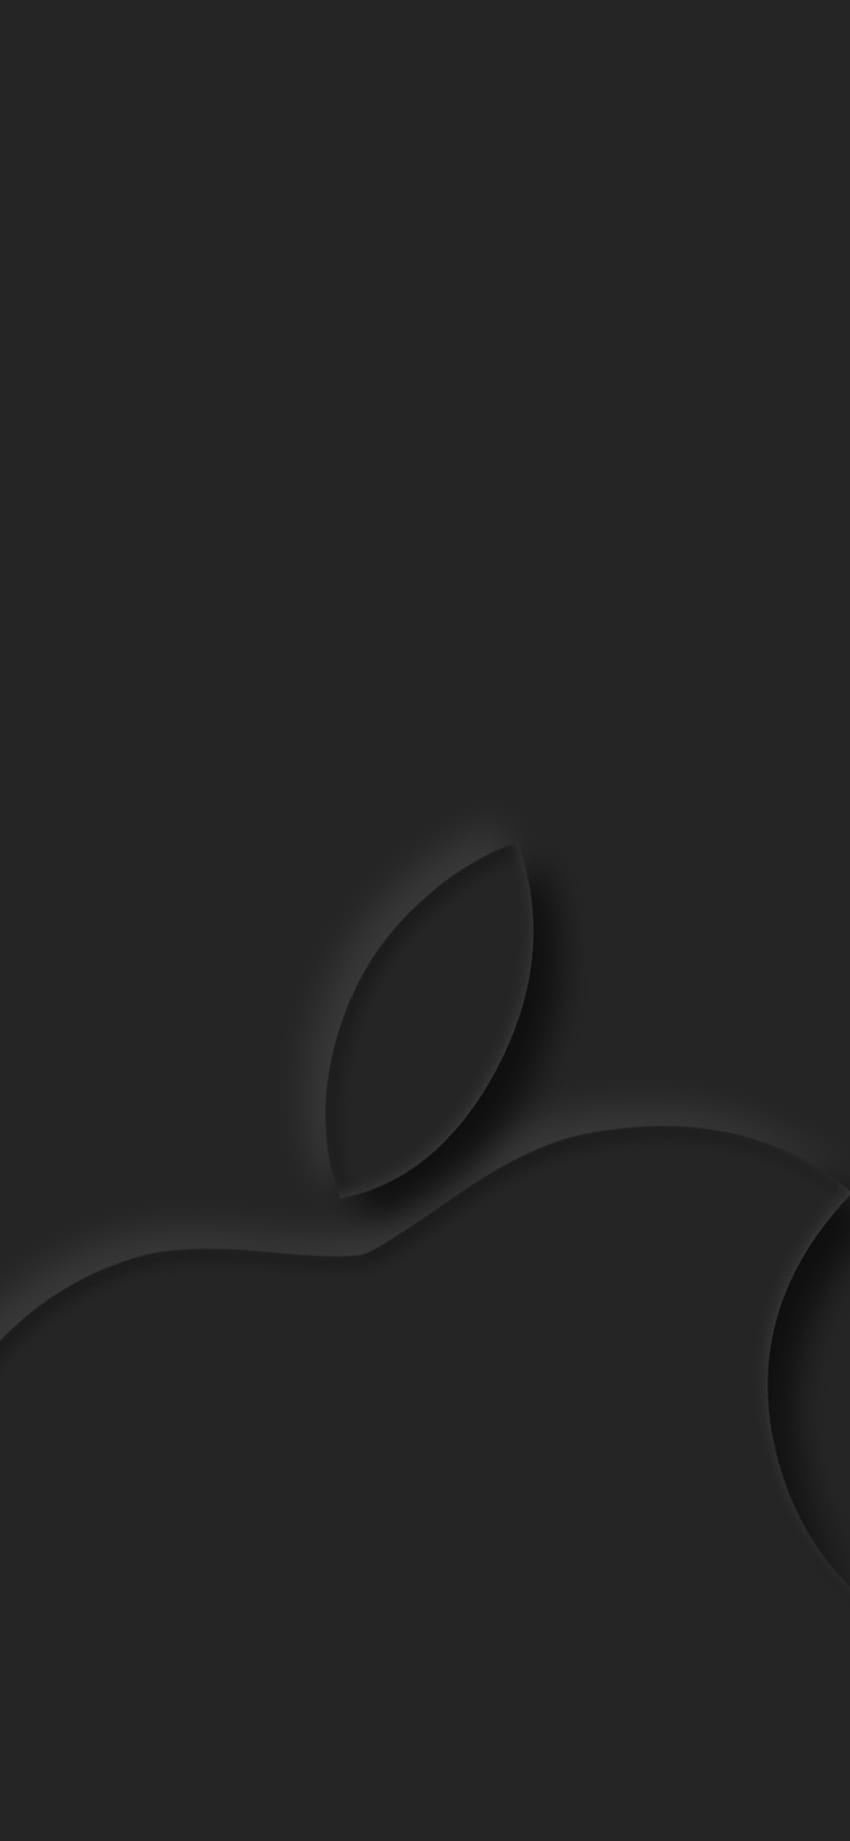 Logotipo de Apple Gris oscuro iPhone XS, iPhone 10, iPhone X, y Apple Iphone fondo de pantalla del teléfono